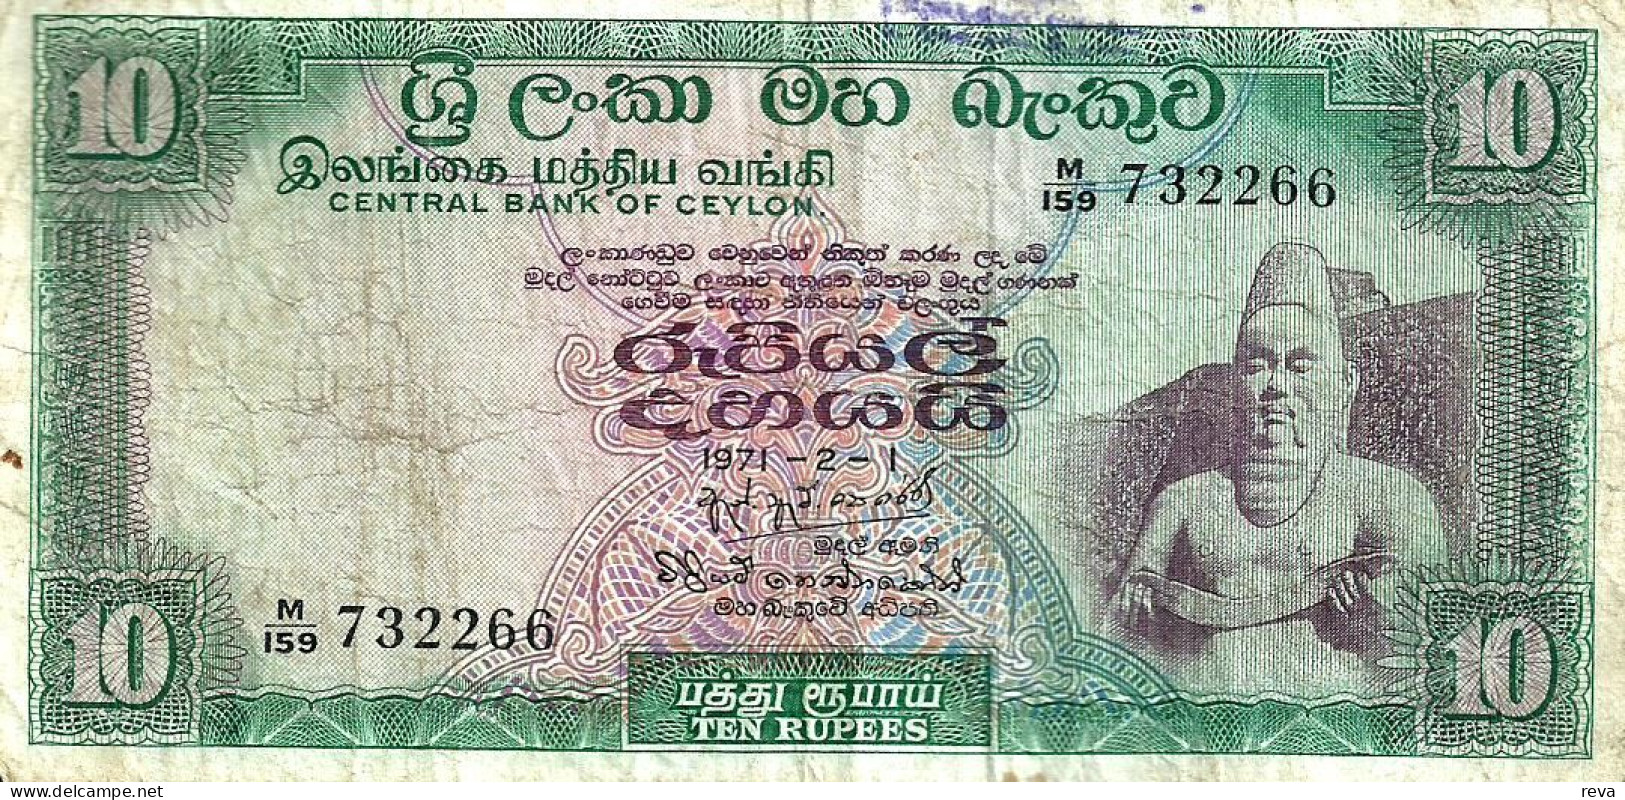 SRI LANKA CEYLON 10 RUPEES GREEN MAN STATUE FRONT & STATUE BACK DATED 01-02-1971 P.74 F+ READ DESCRIPTION CAREFULLY !!! - Sri Lanka